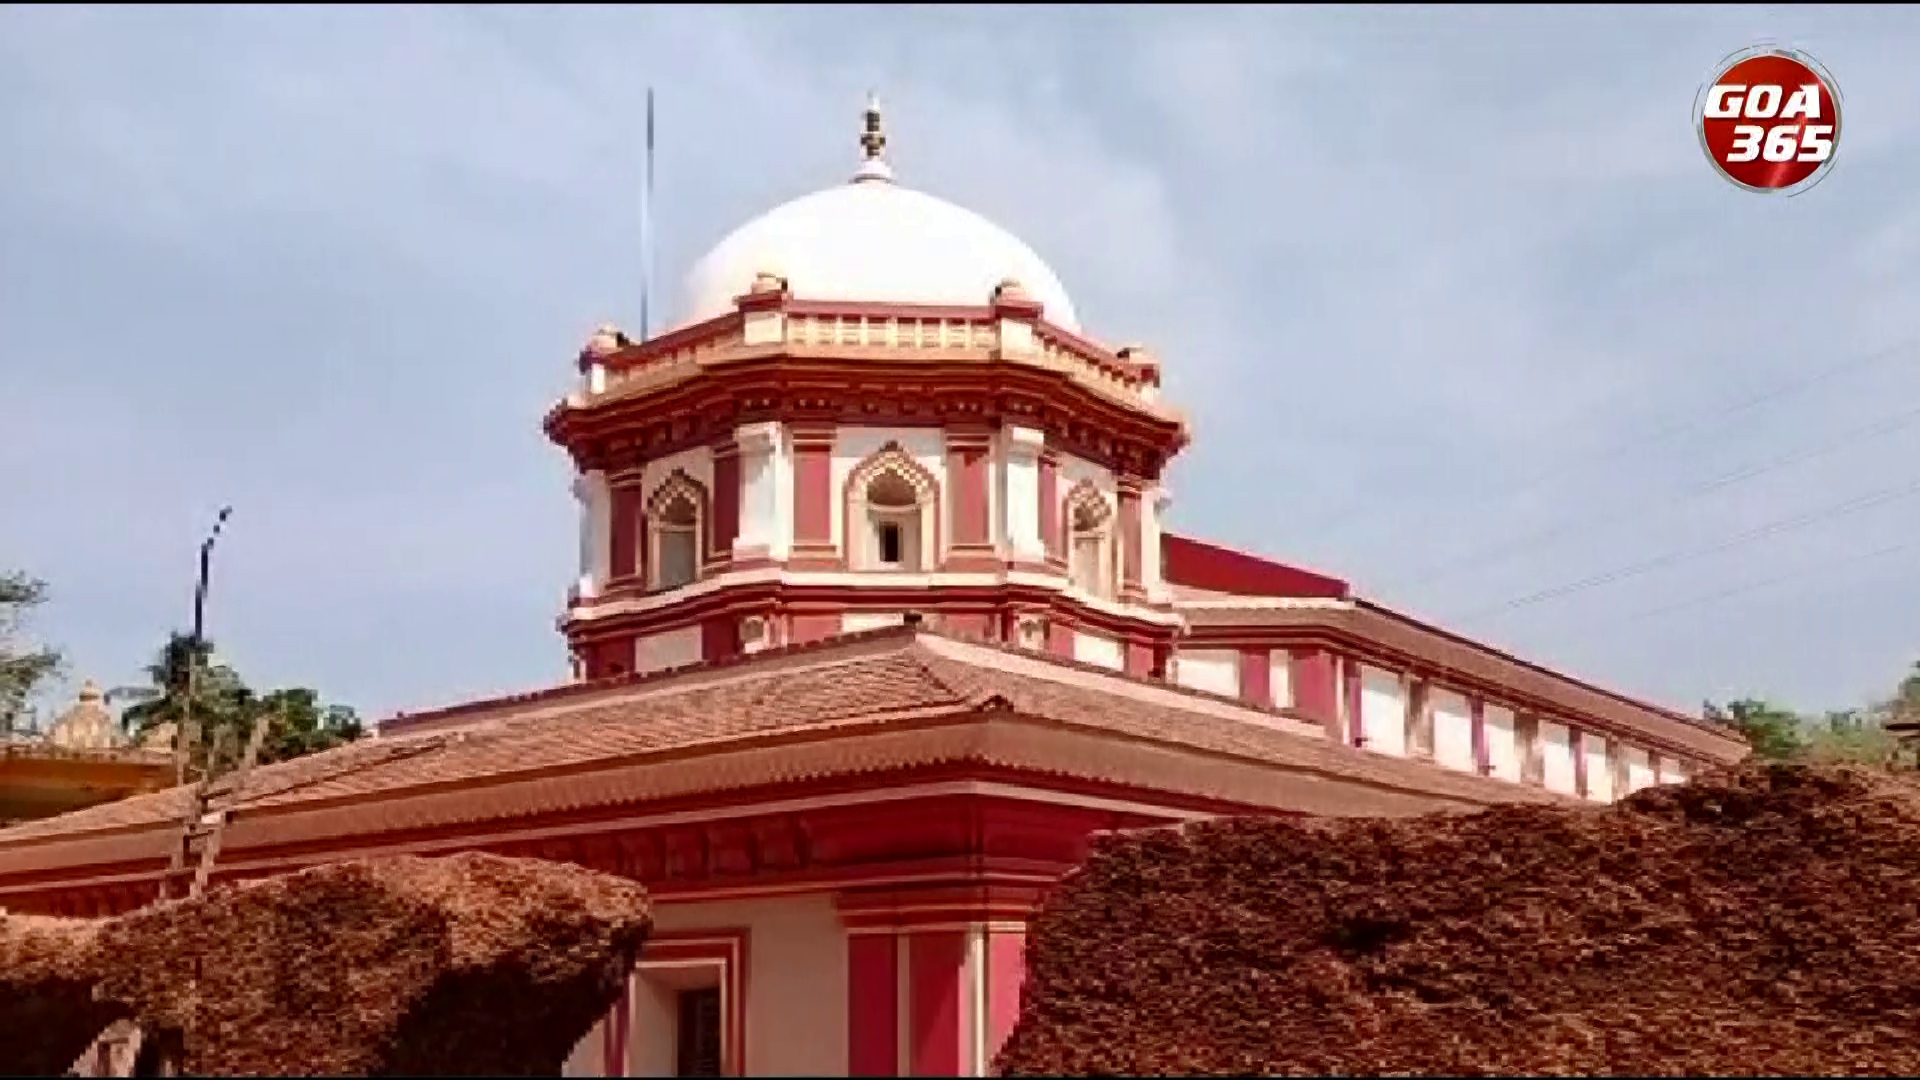 After 5 years of renovation, Saptakoteshwar temple finally complete: WATCH ||GOA365